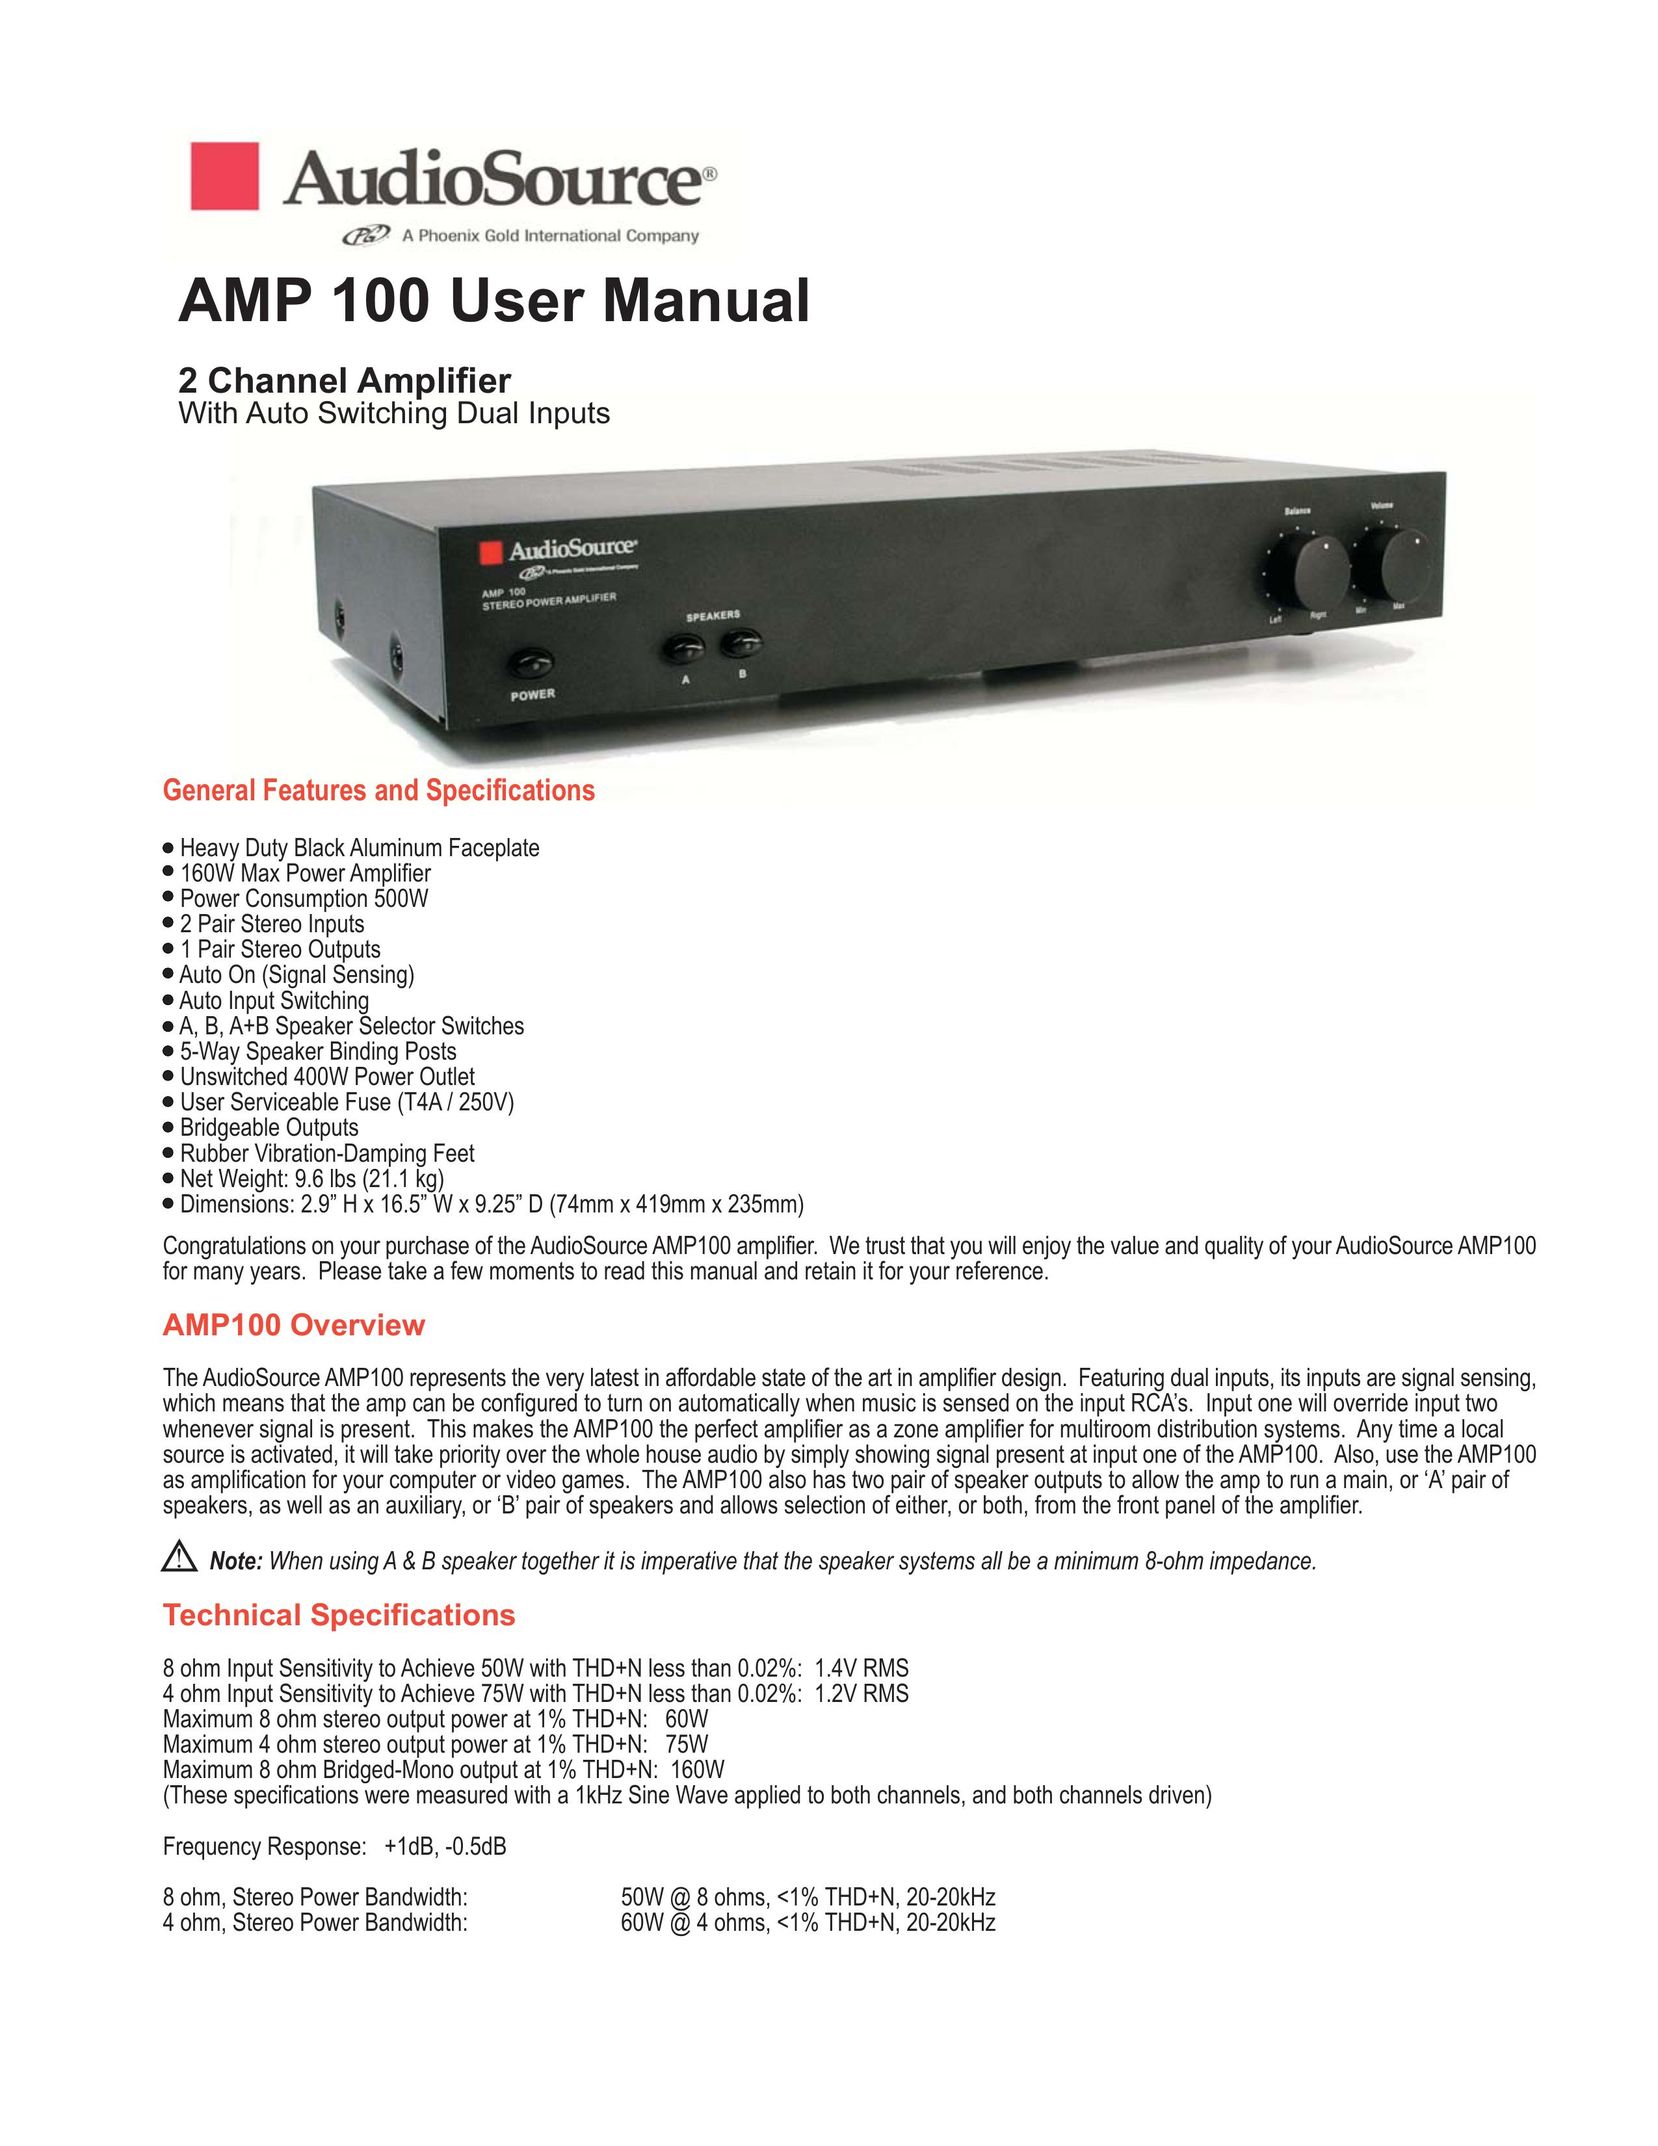 AudioSource AMP 100 Car Amplifier User Manual